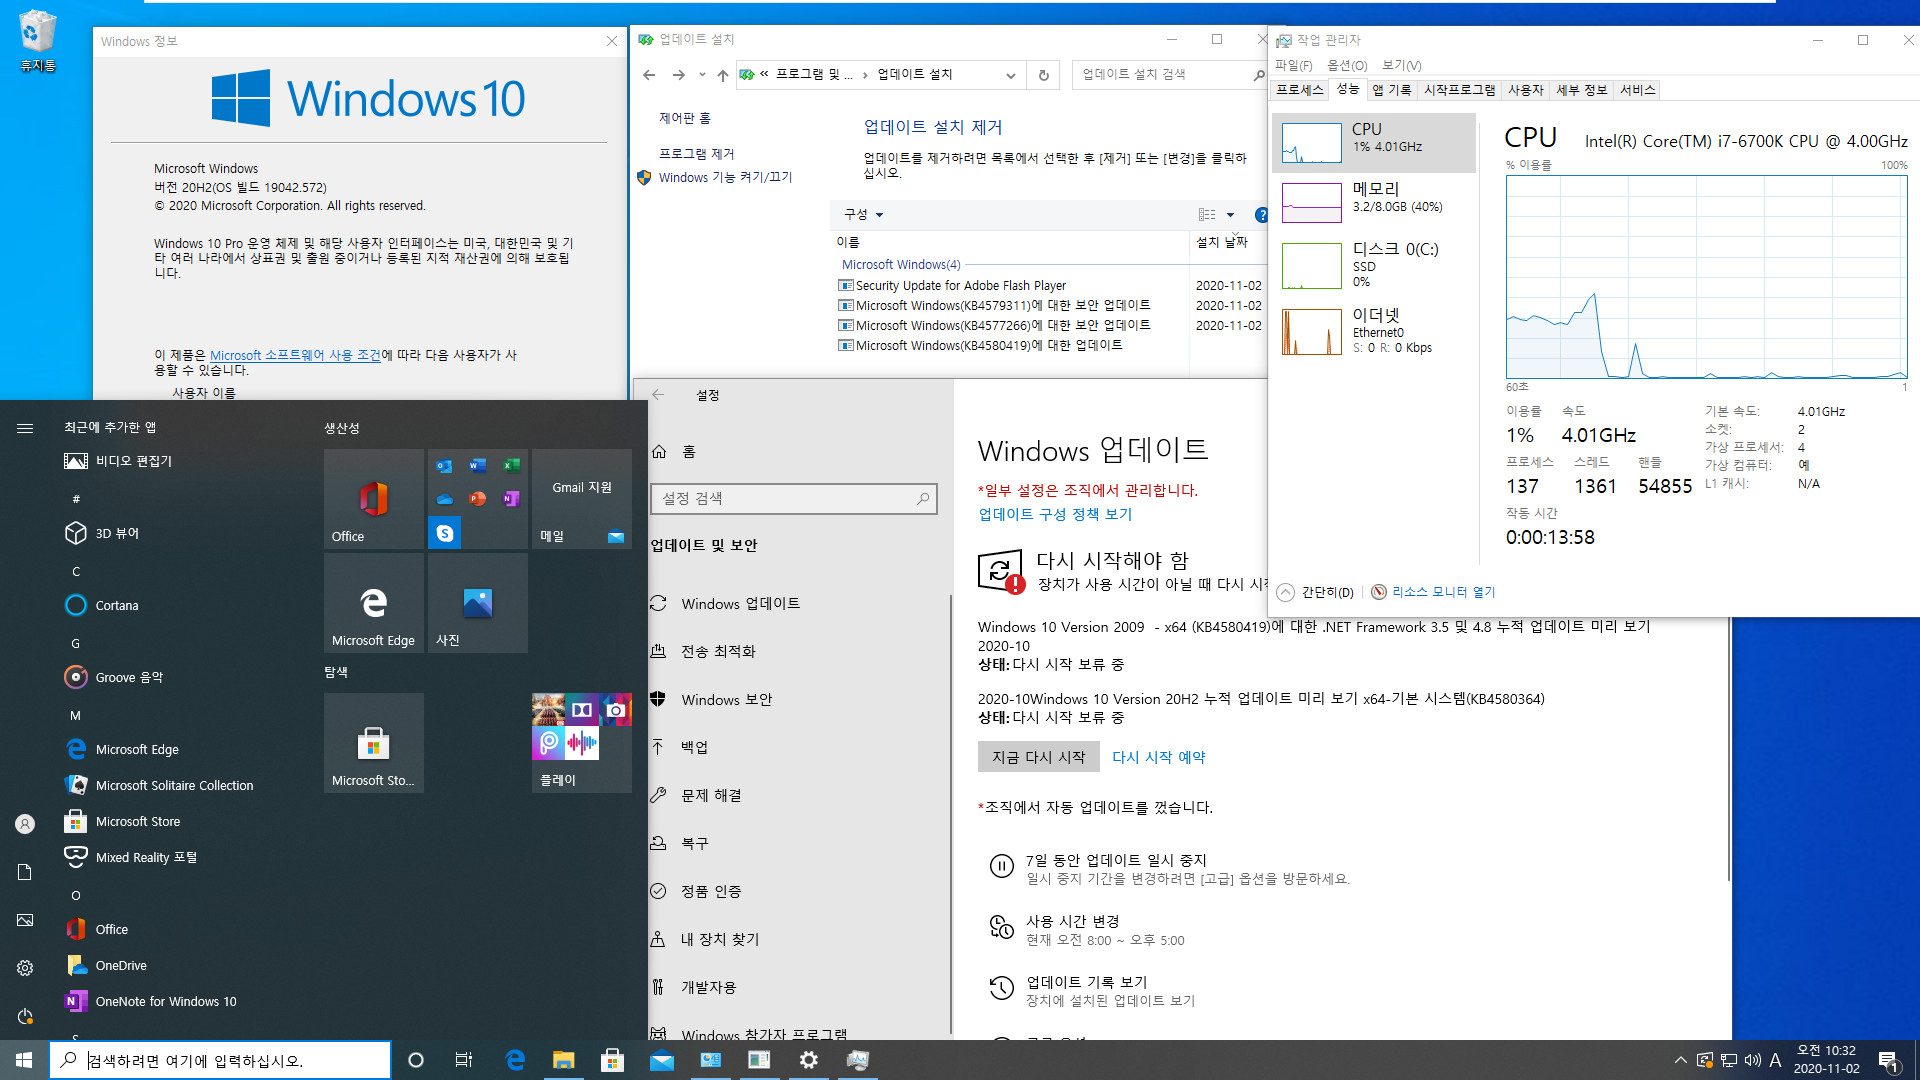 Windows 10 버전 20H2 기능 업데이트 KB4562830 폴더의 mum 파일들만 찾아서 설치하기.bat - 크로미엄 엣지 설치하지 않고 버전 20H2만 설치하기 테스트 - 뻘짓했네요 2020-11-02_103256.jpg